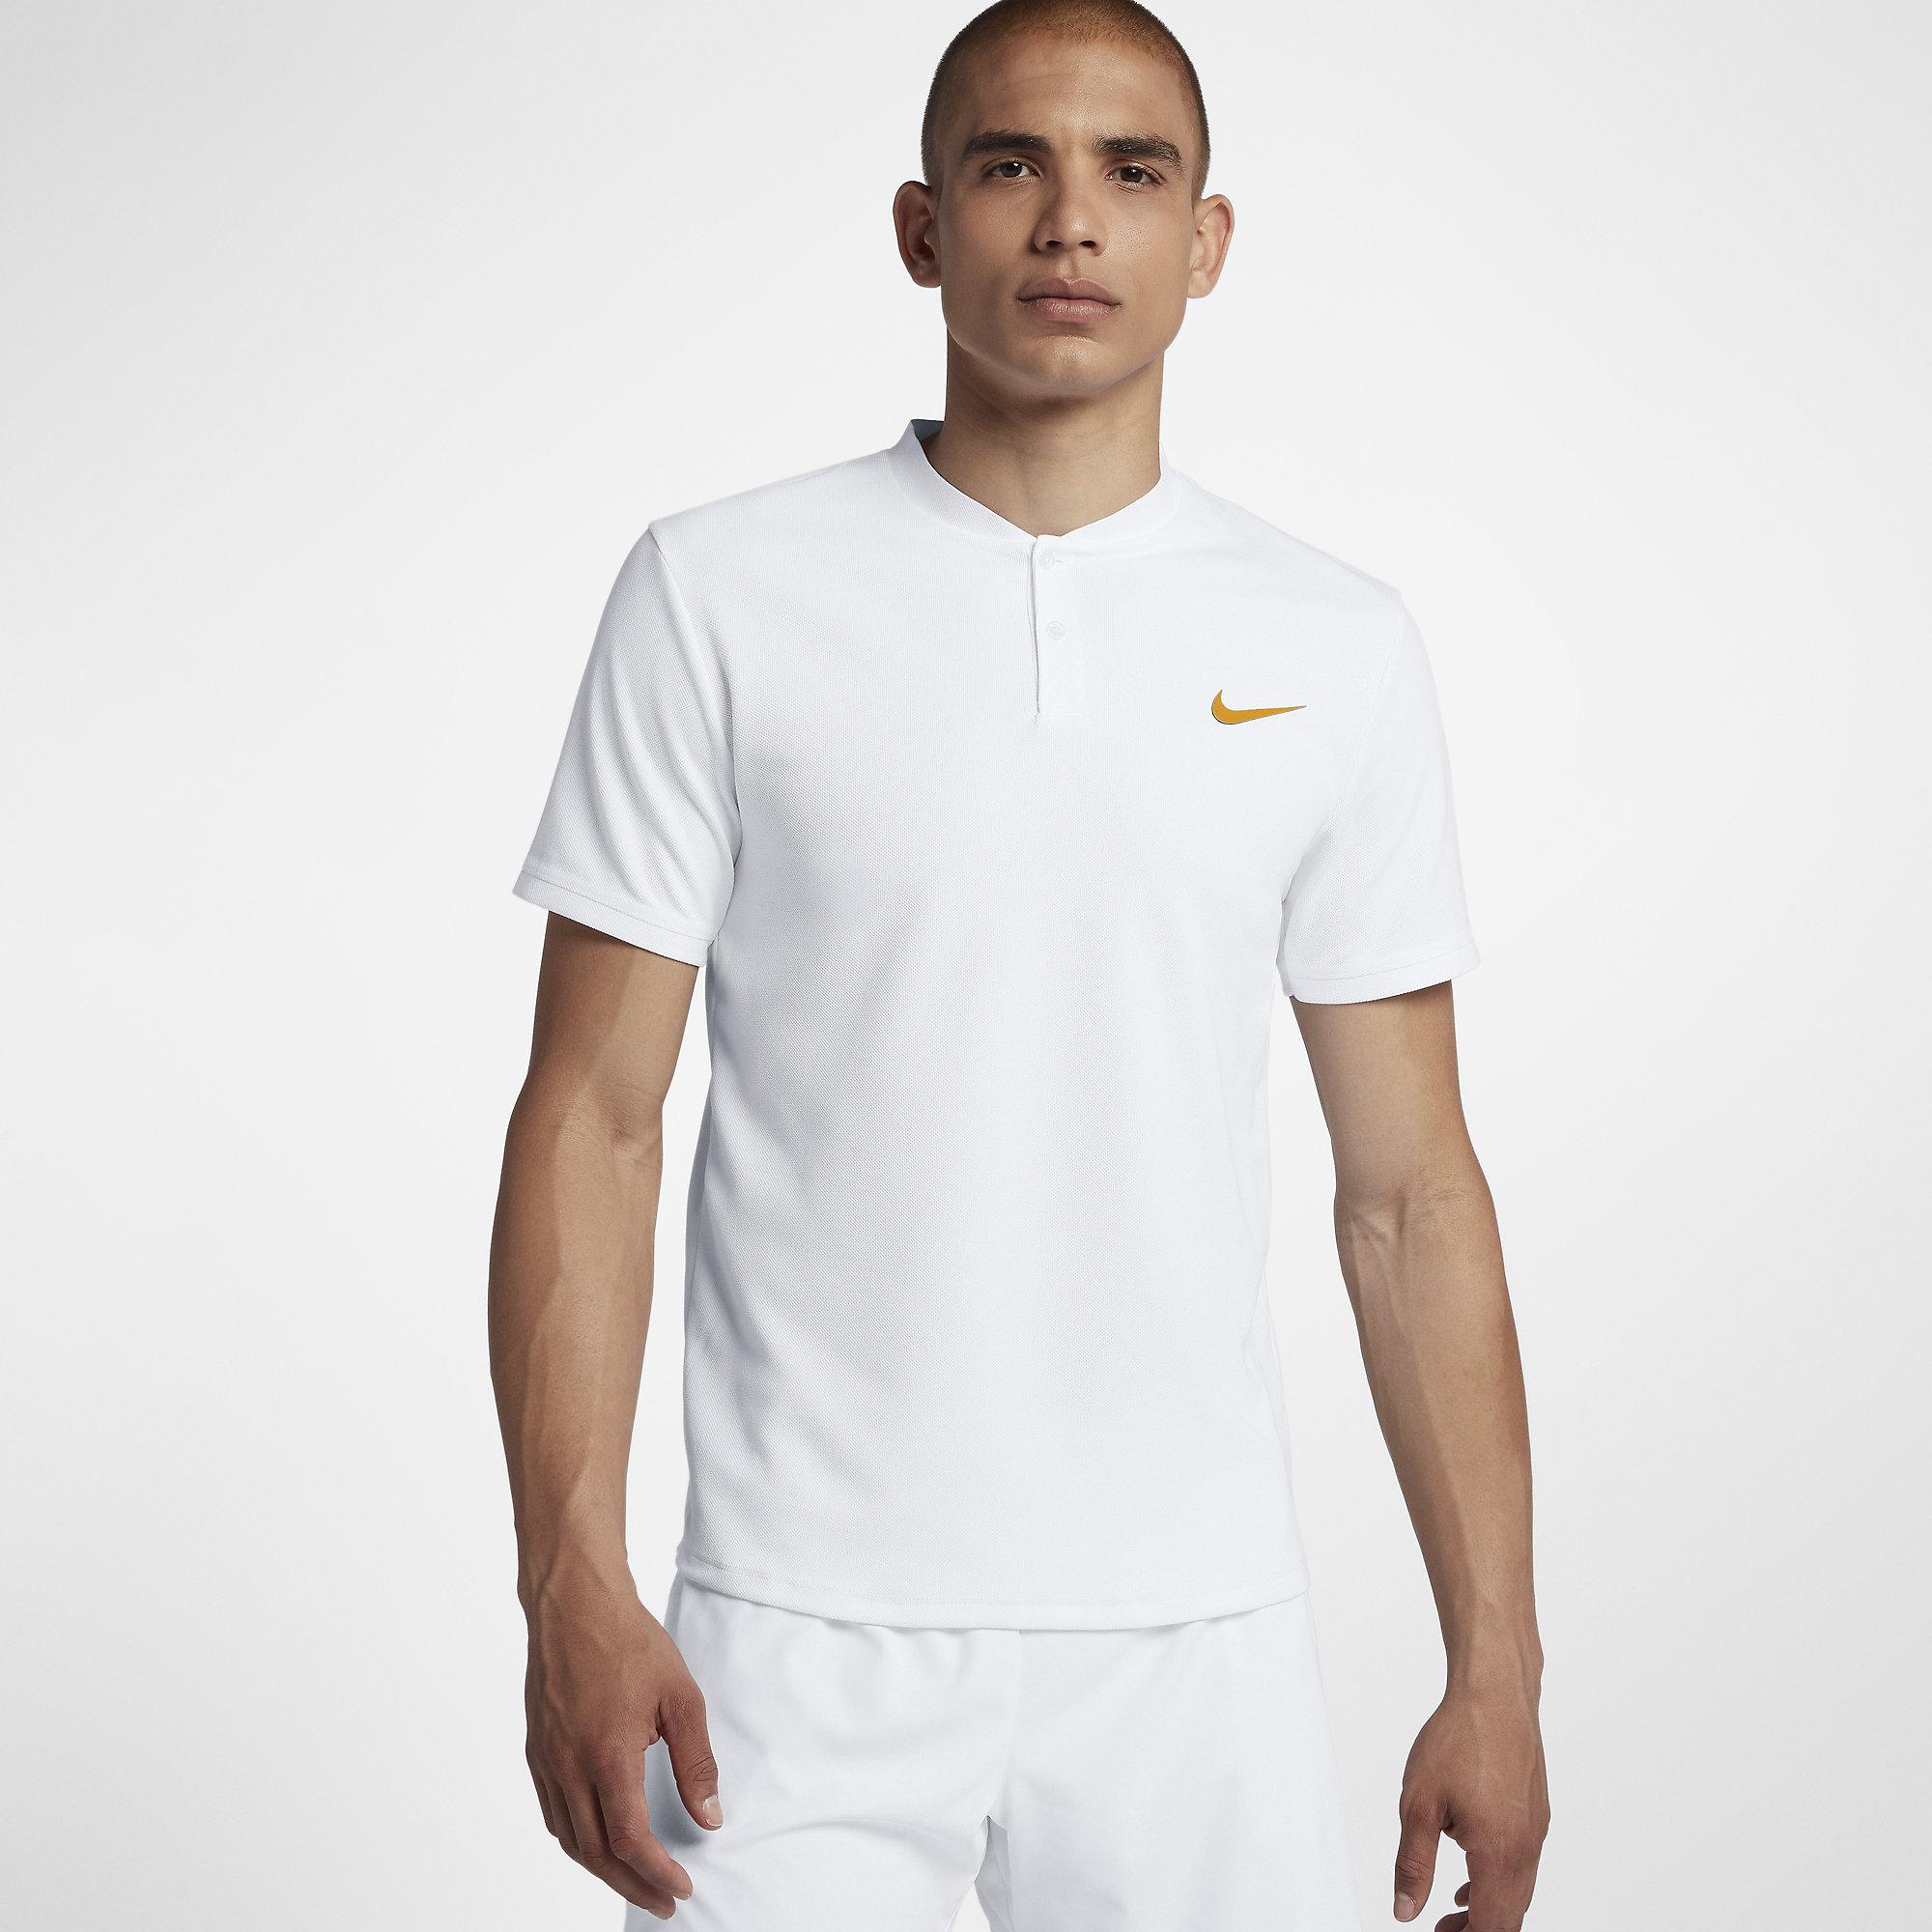 Nike Mens Dri-FIT Advantage Polo - White/Gold Leaf - Tennisnuts.com